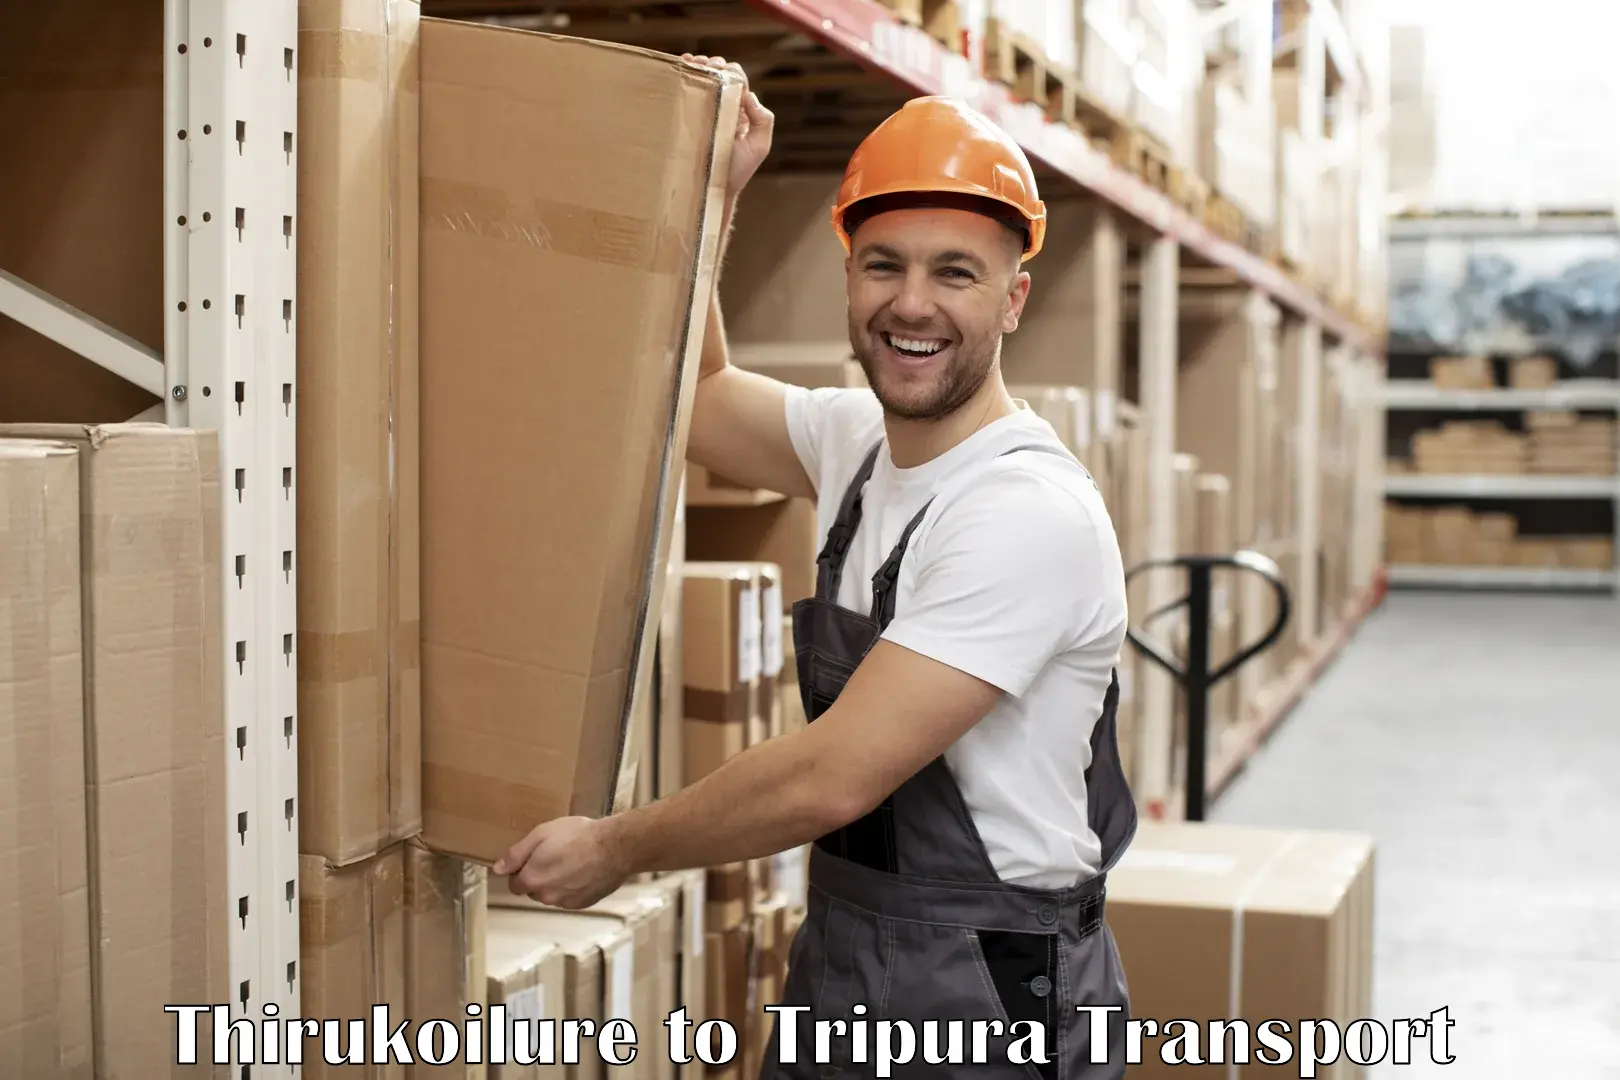 Transport shared services Thirukoilure to Tripura